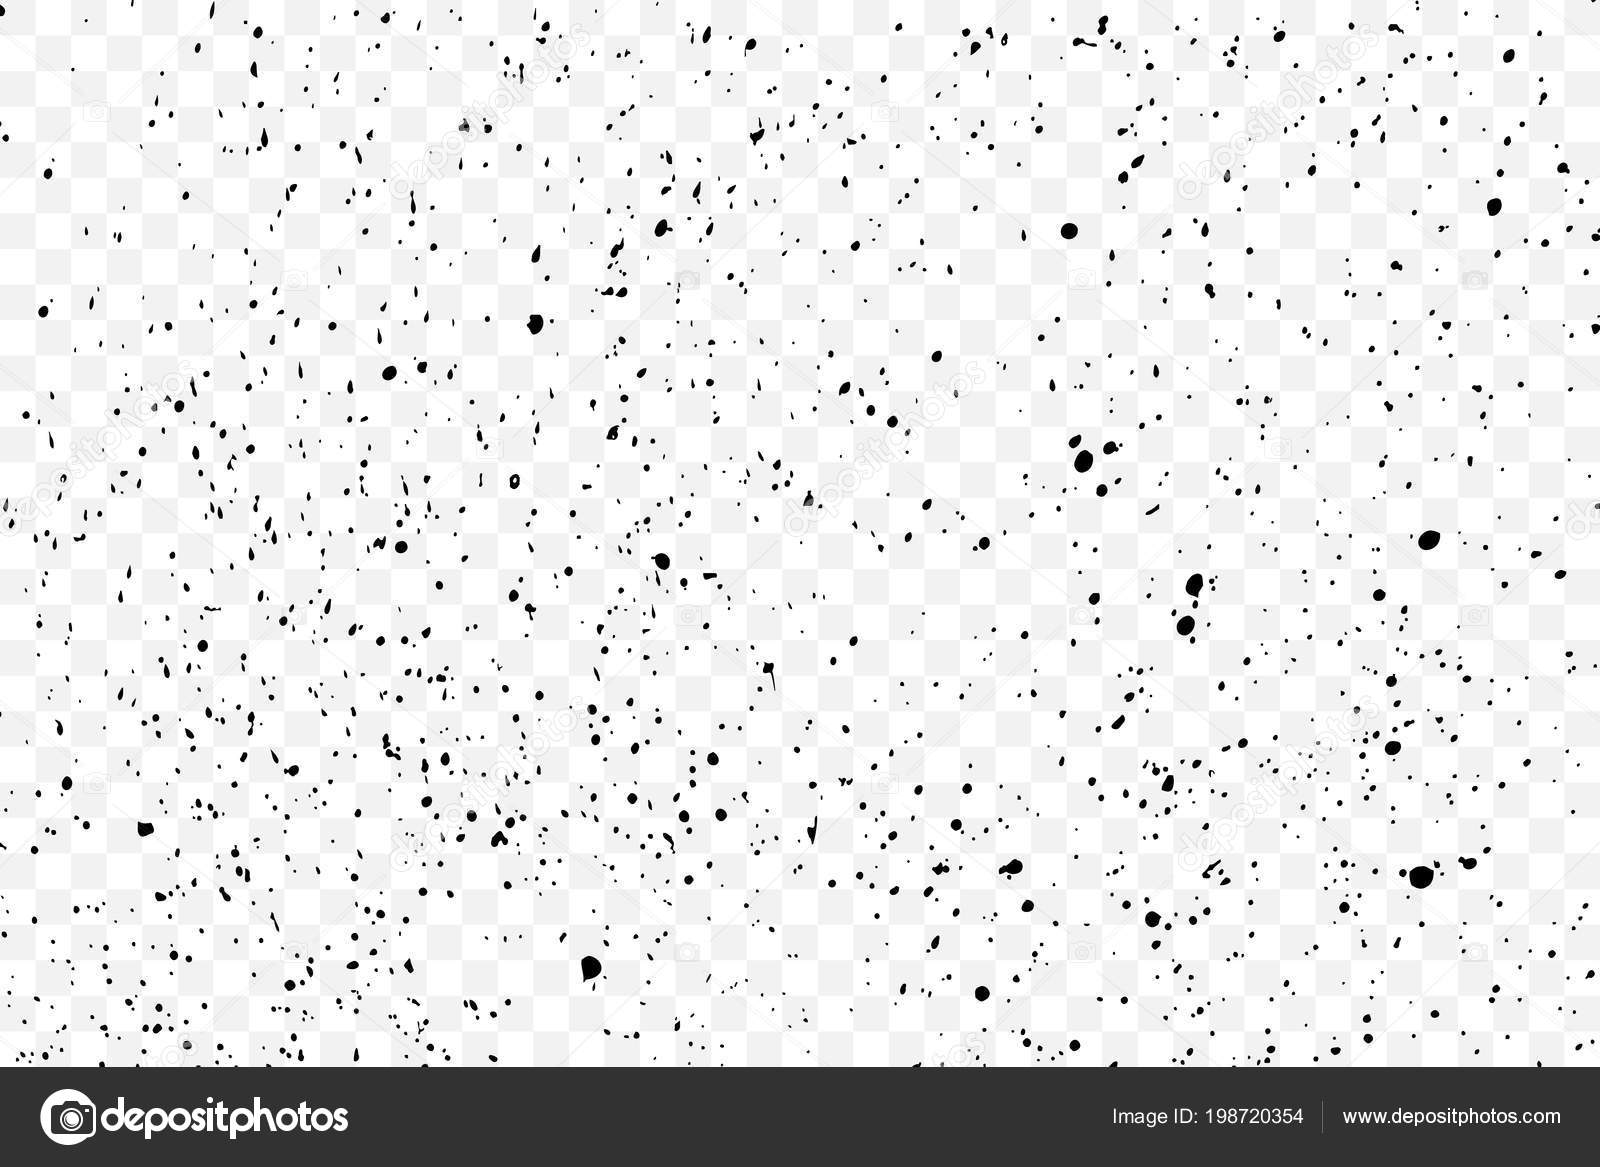 Grainy Grunge Abstract Texture Transparent Background Paint Spray Drop Splatter Vector Image By C Goldenshrimp Vector Stock